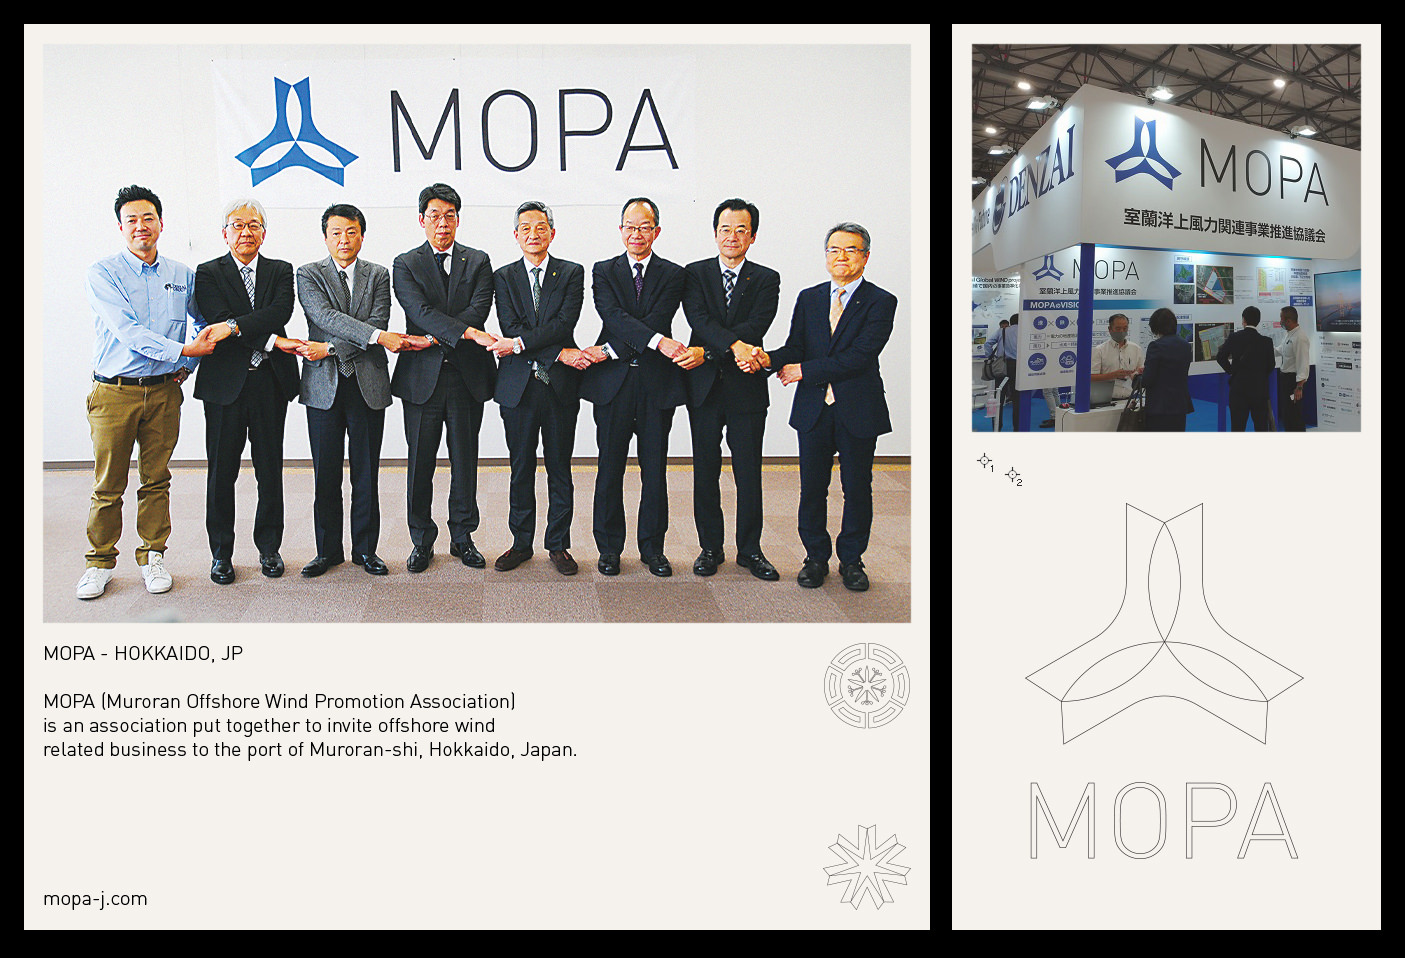 mopa-offshore-wind-association-muroran-shi-hokkaido-hakodate-oshima-corporate-logo-vacaliebres-branding-